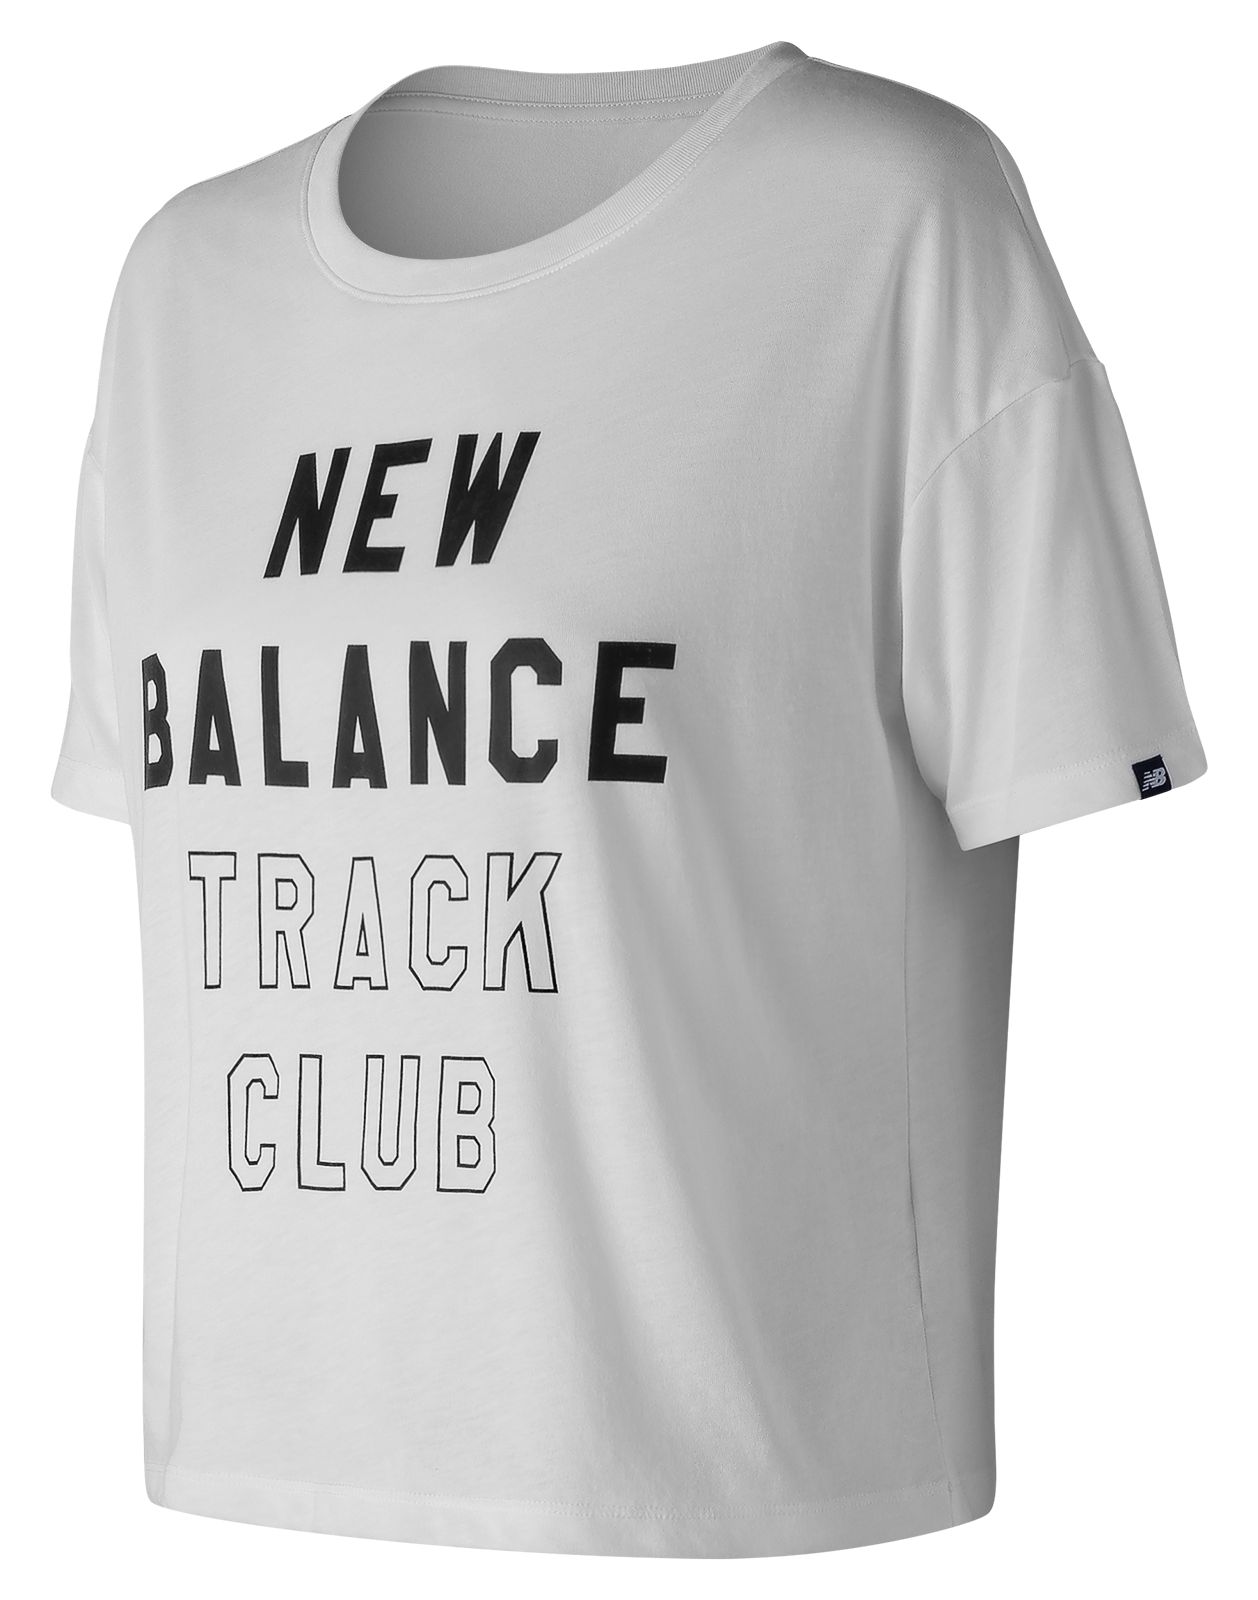 new balance track club t shirt